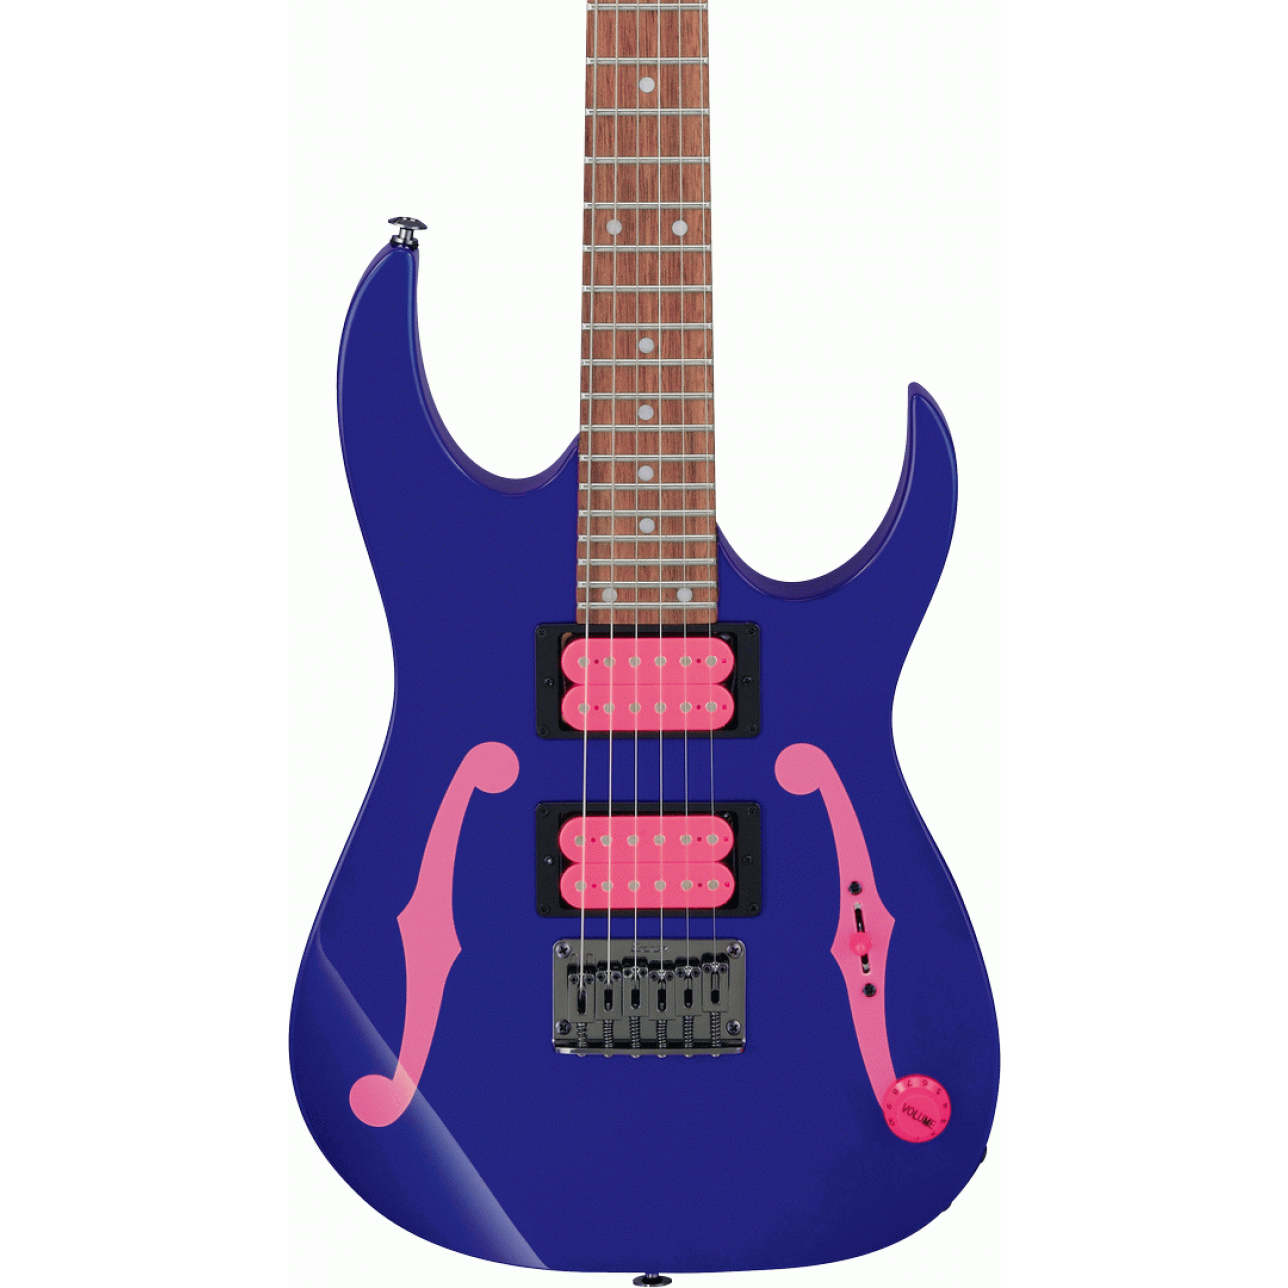 Ibanez PGMM11 JB Paul Gilbert Electric Guitar (Jewel Blue)